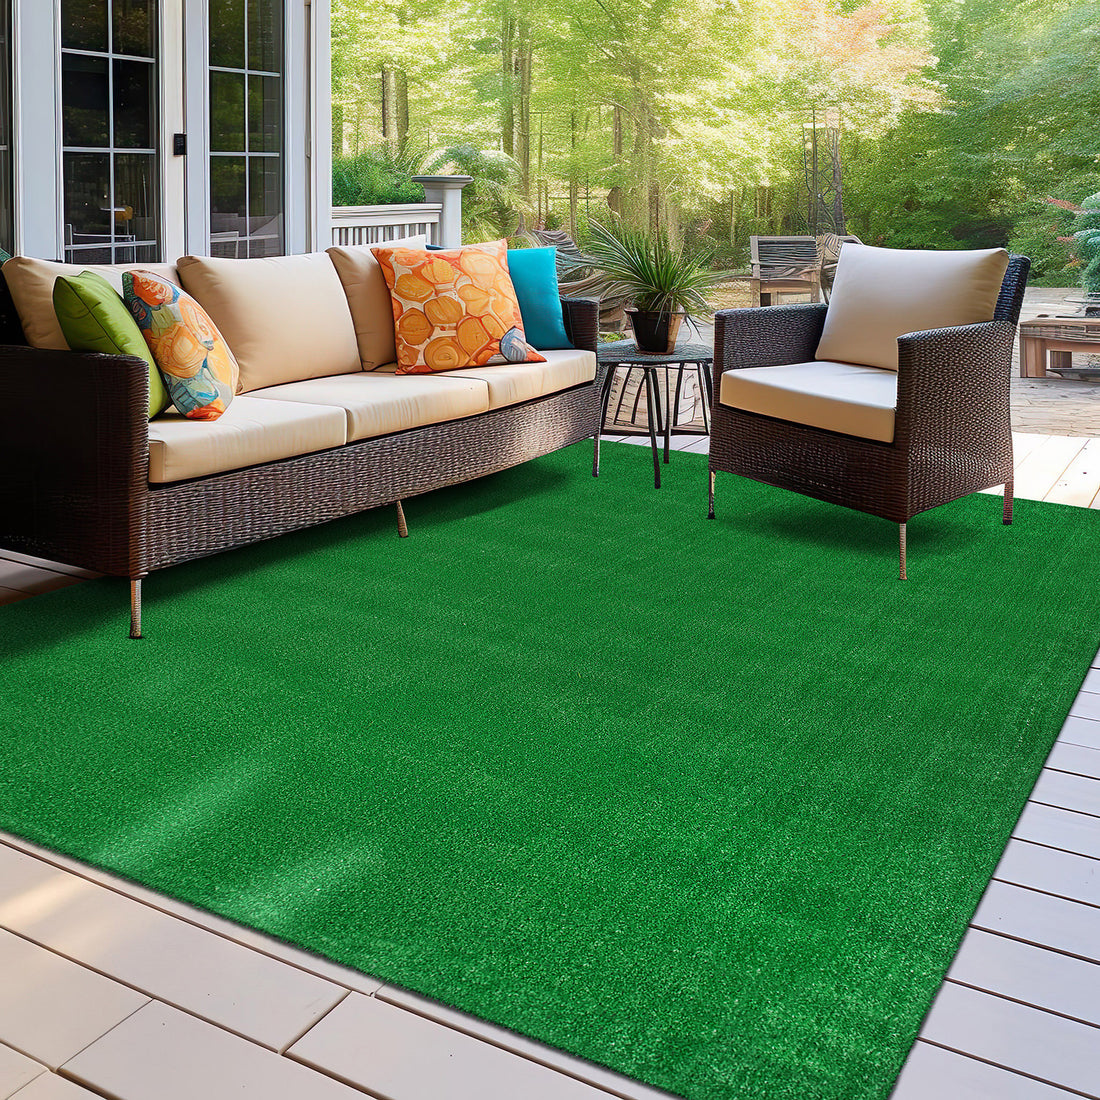 Artificial Turf Solid Grass Indoor Outdoor Area Rug - GREEN 6'6"x9'